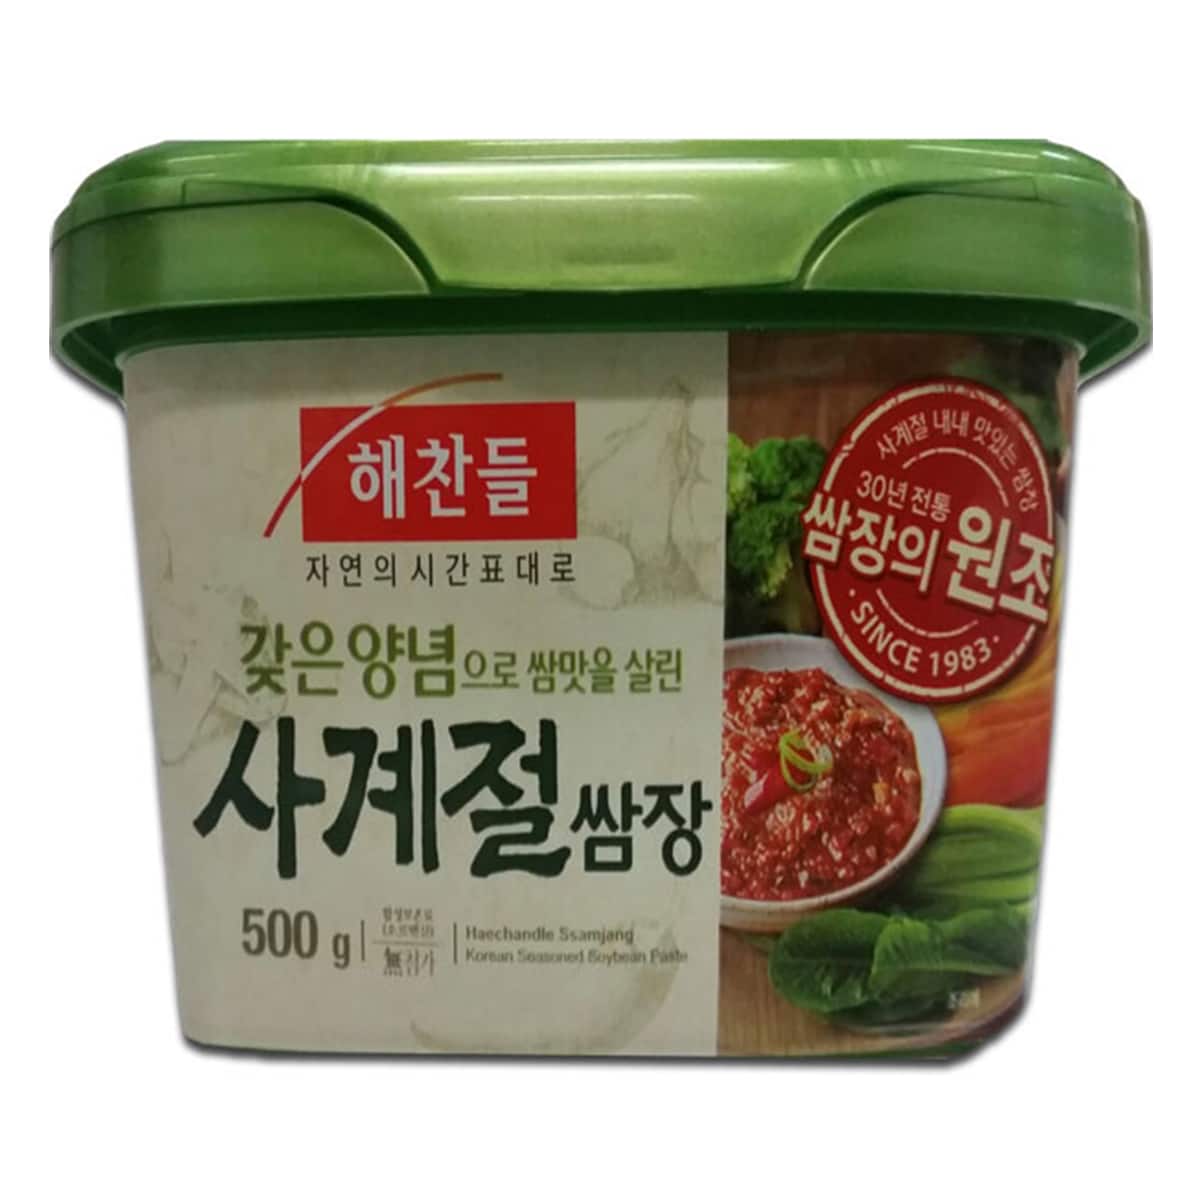 Buy CJ Haechandle Korean Seasoned Soybean Paste - 500 gm